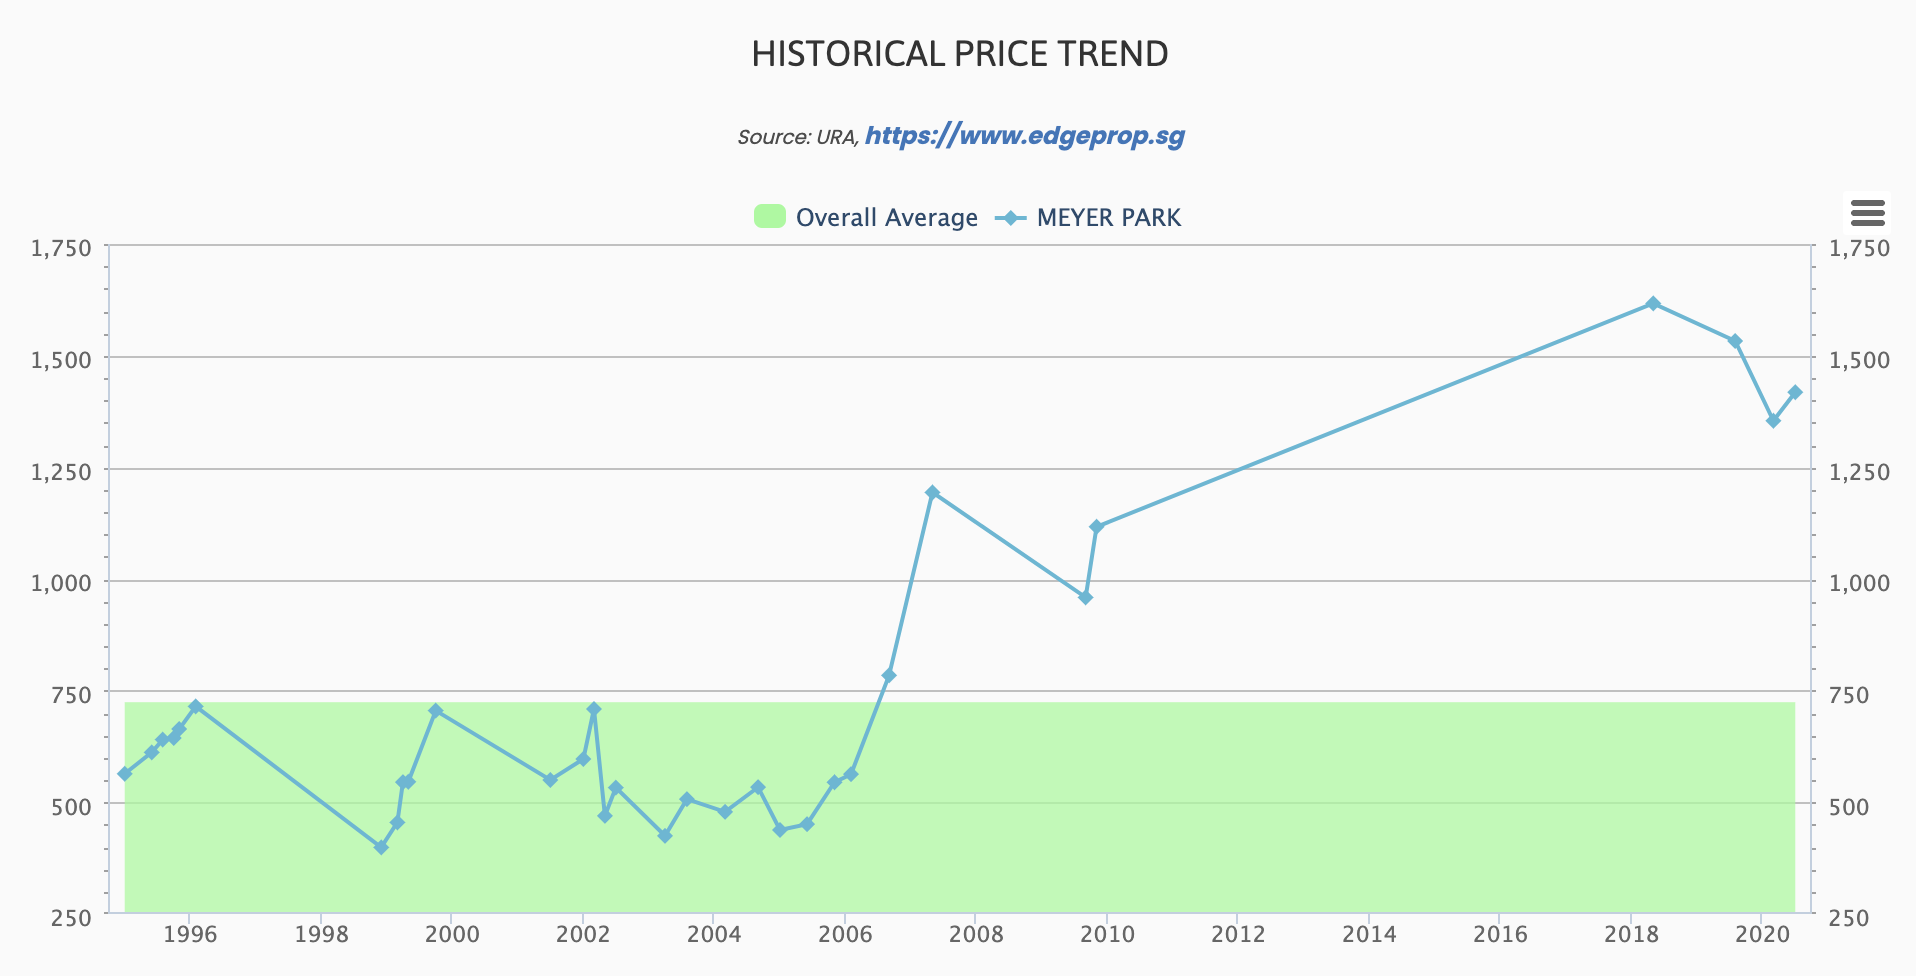 Meyer Park Historical Price Trend